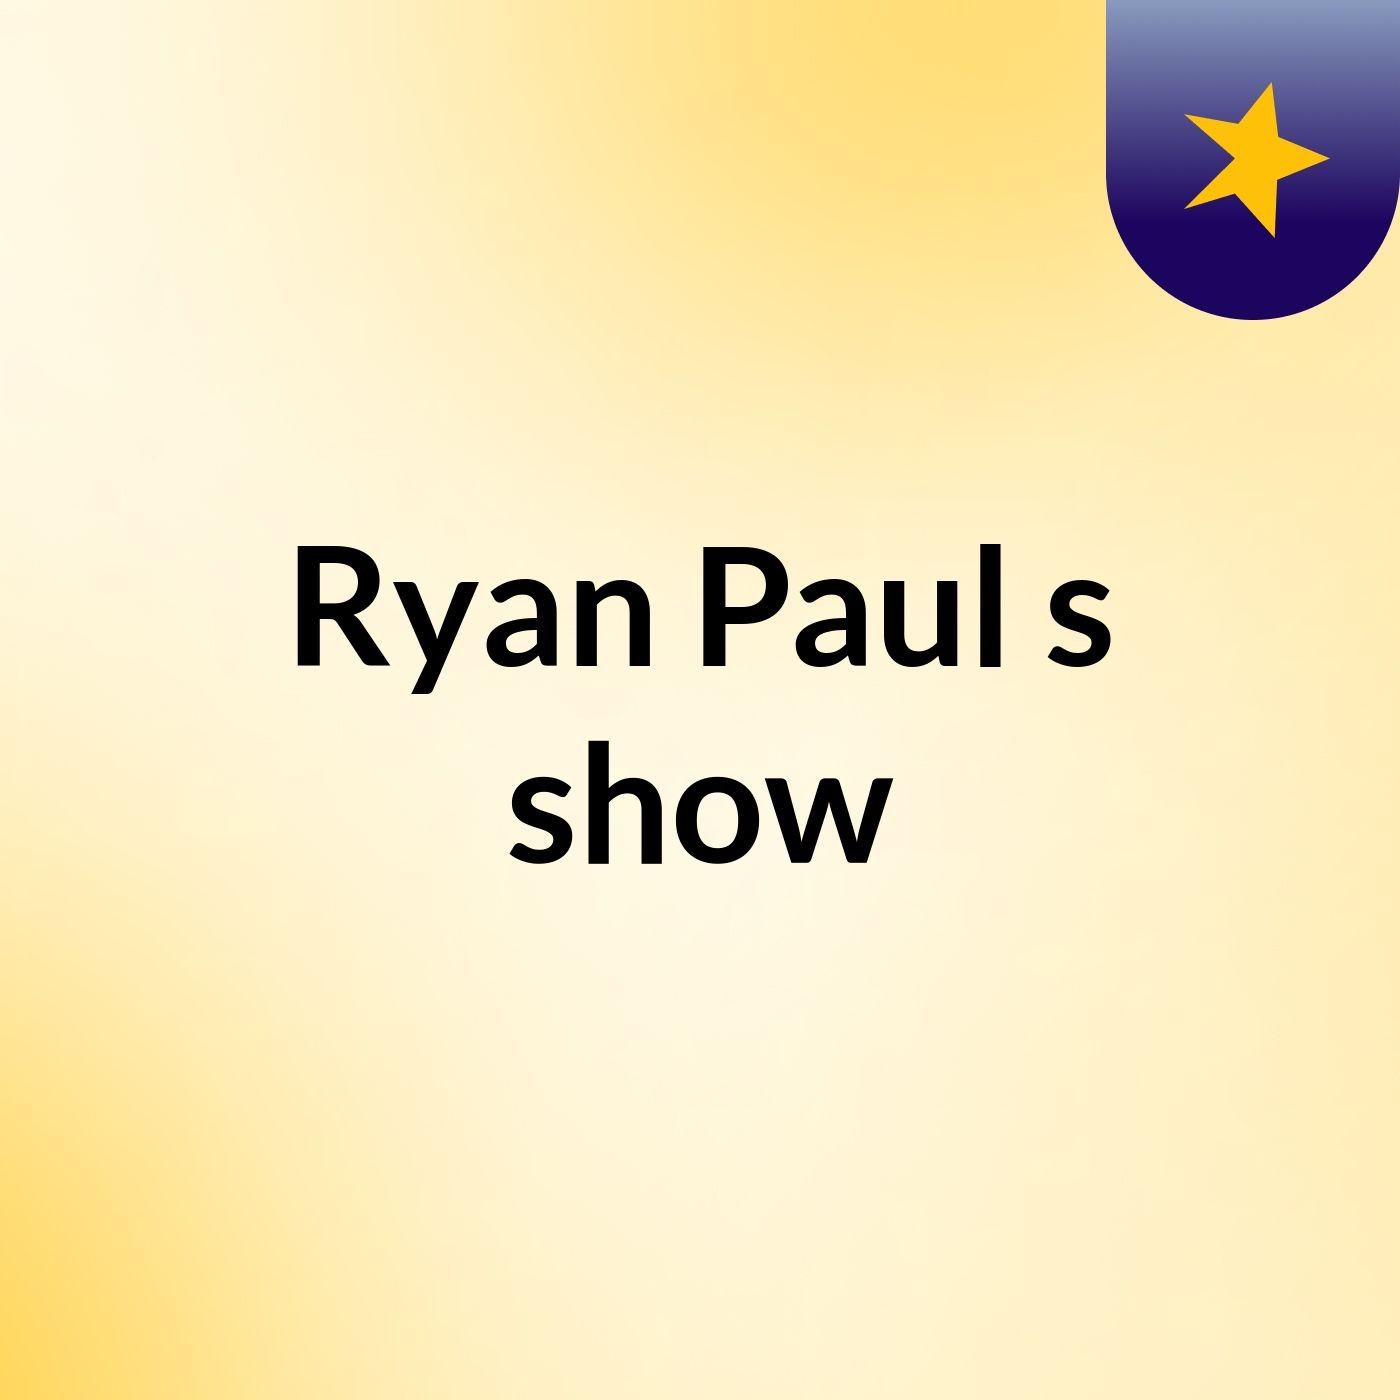 Ryan Paul's show